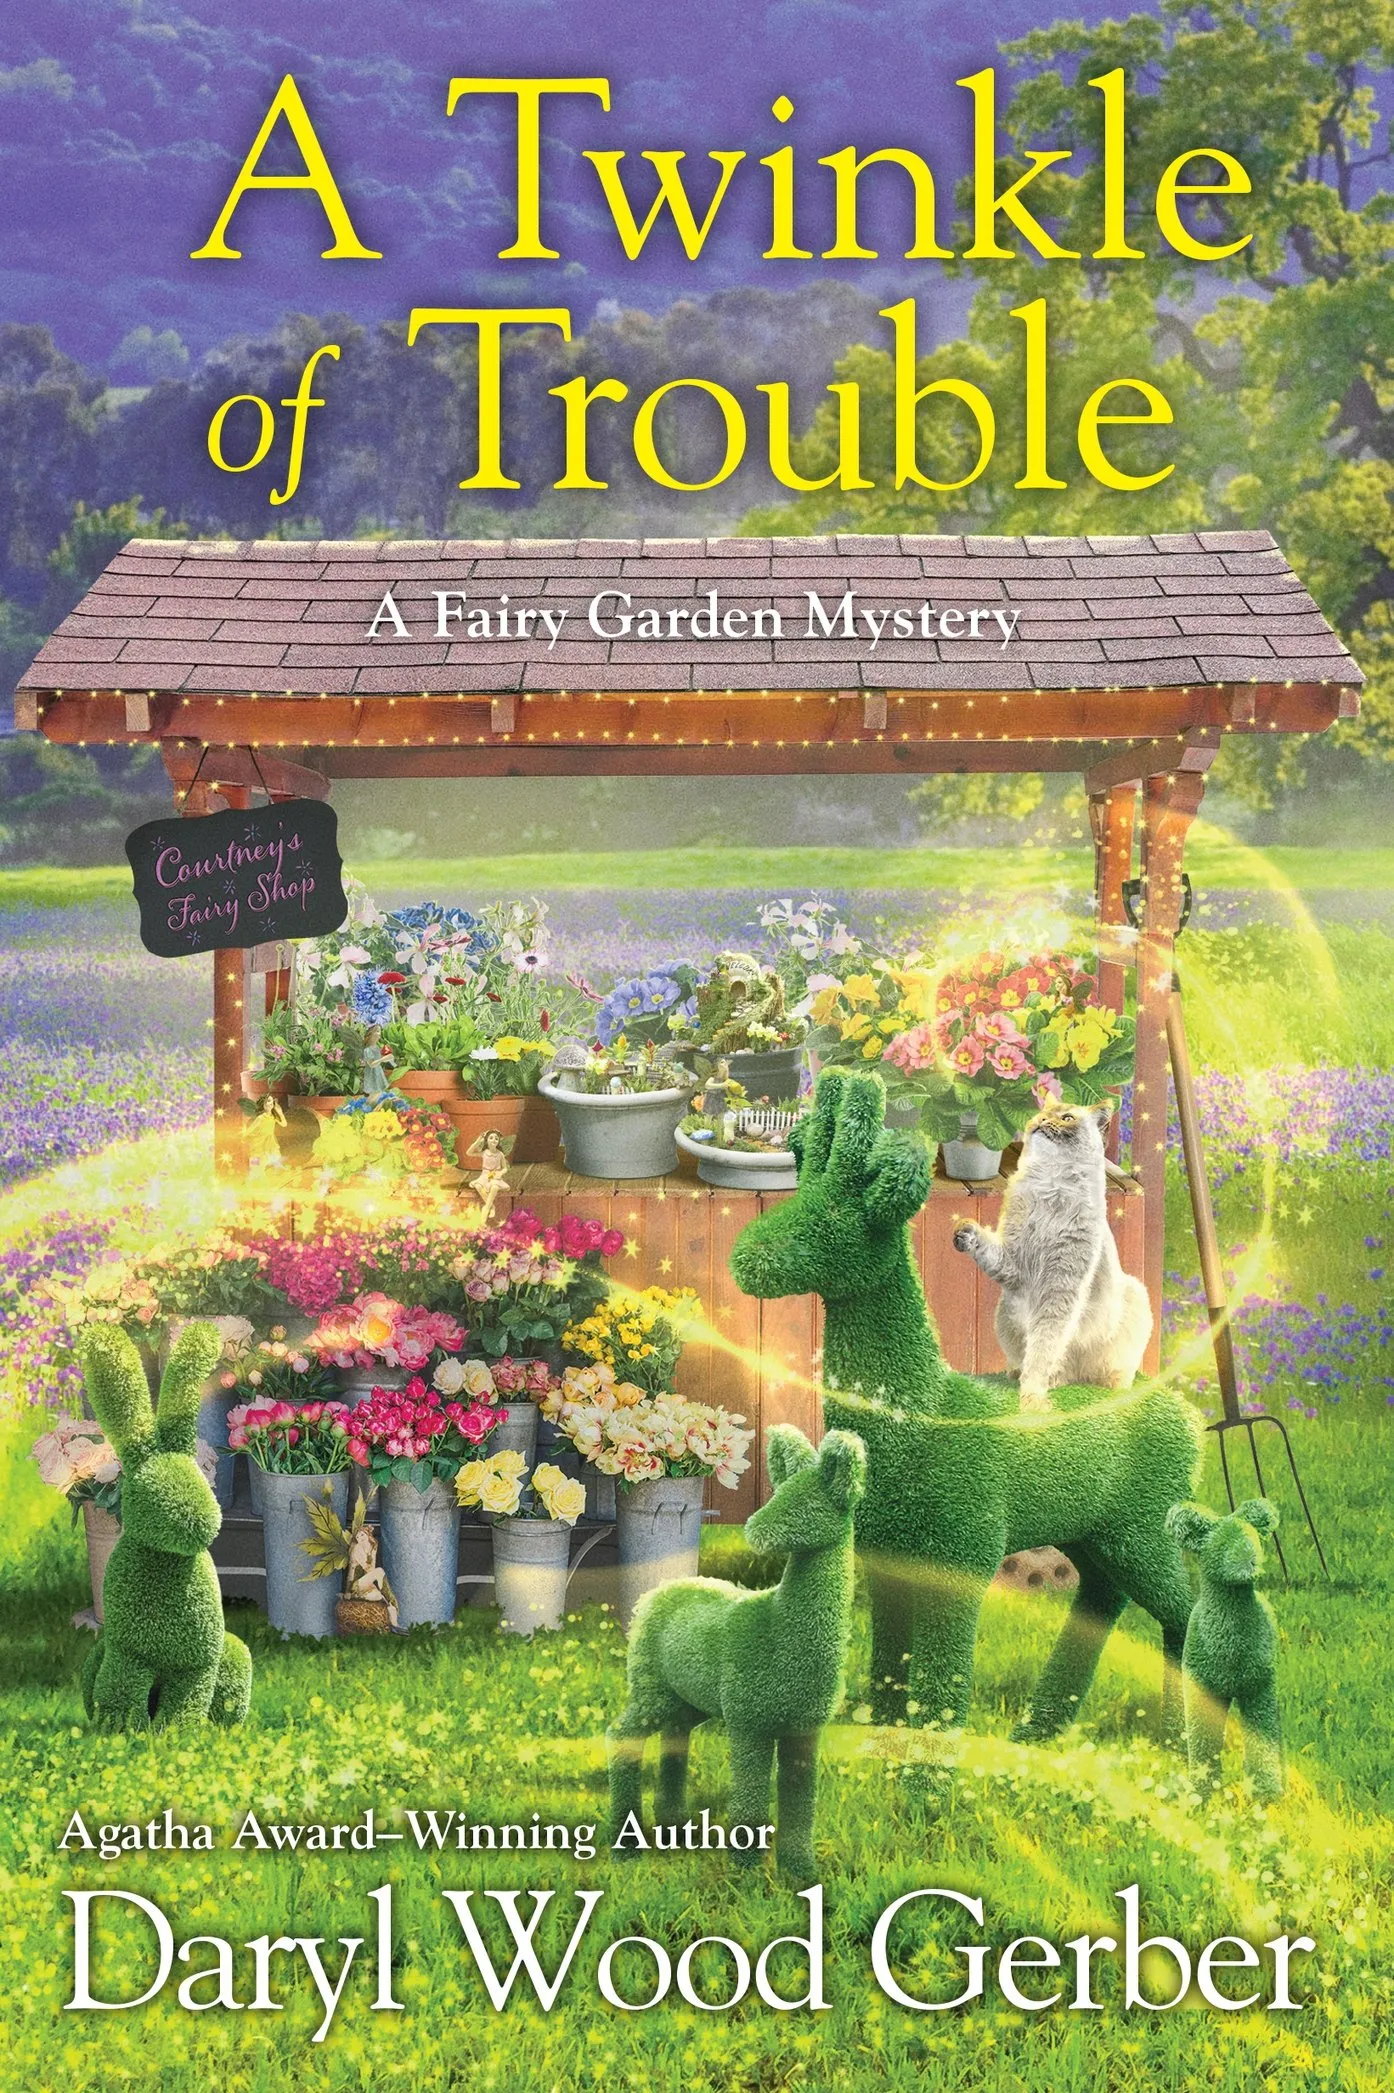 A Twinkle of Trouble (A Fairy Garden Mystery #5)